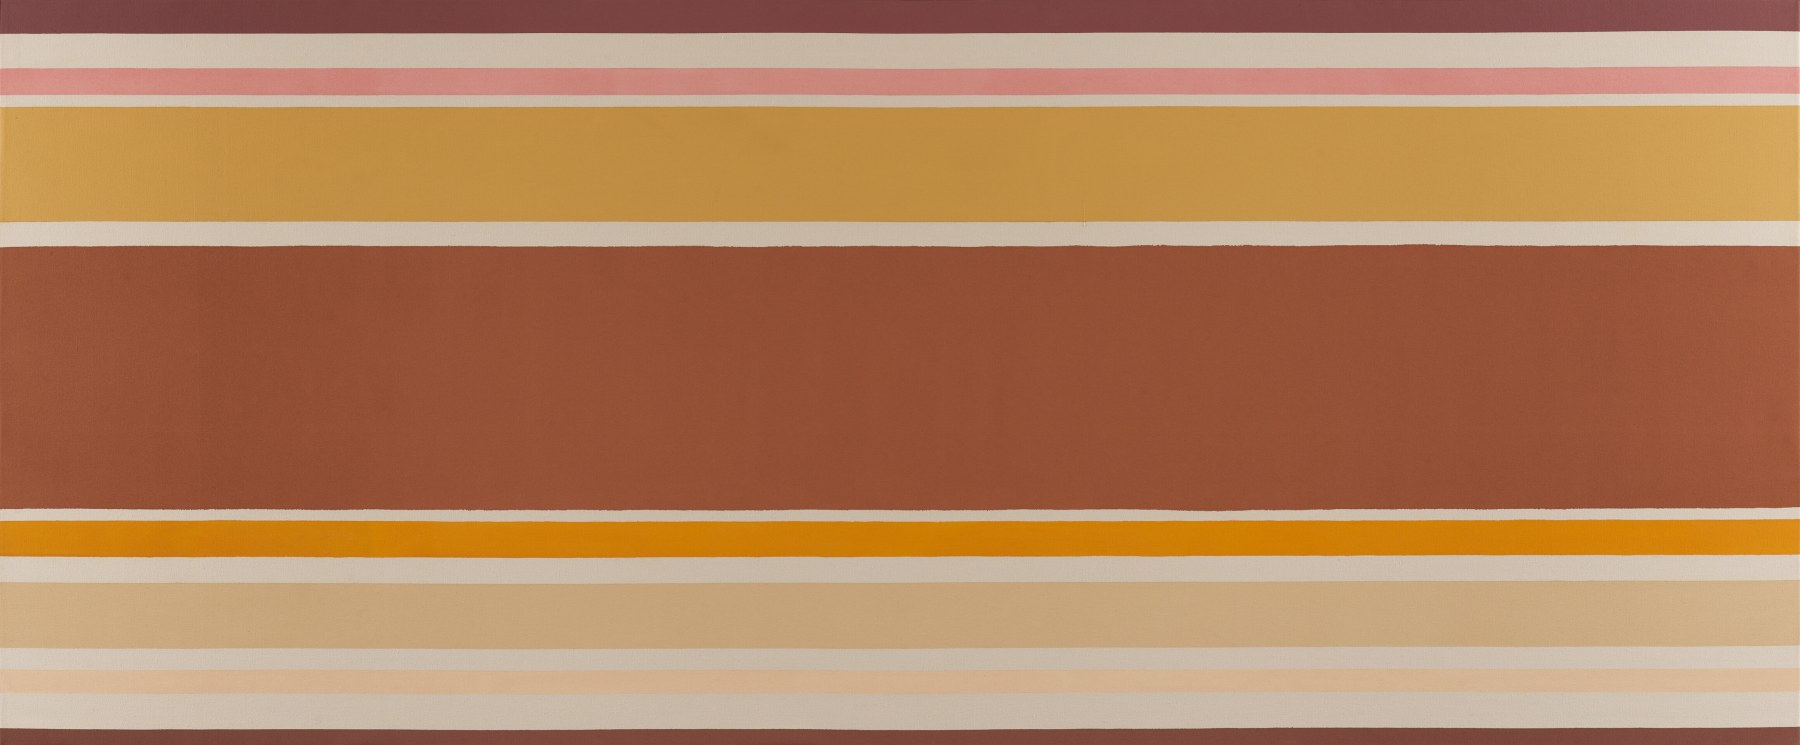 KENNETH NOLAND (1924-2010)

Umber

1968

Acrylic on canvas

57 1/16 x 137 3/16 inches

144.9 x 348.5cm